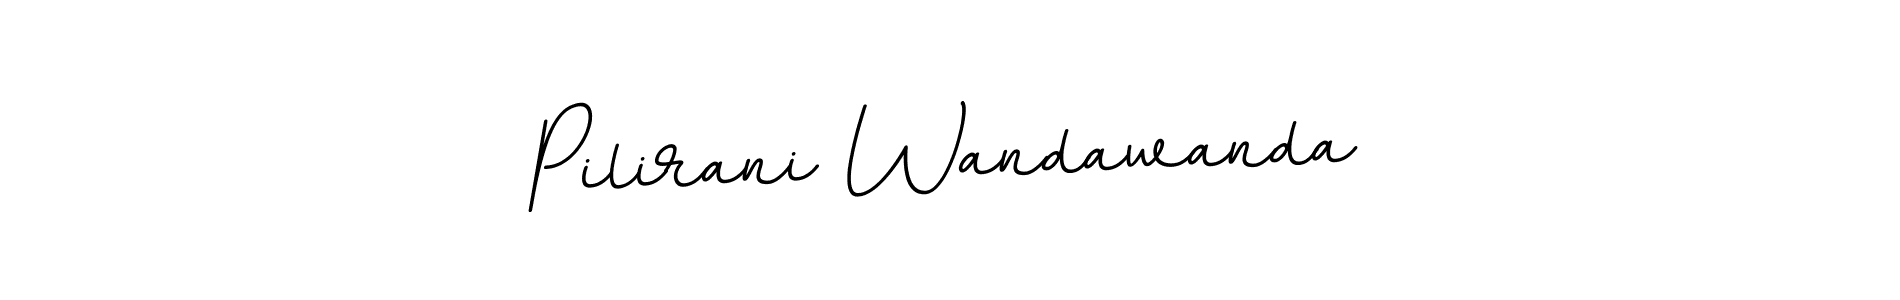 Make a beautiful signature design for name Pilirani Wandawanda. Use this online signature maker to create a handwritten signature for free. Pilirani Wandawanda signature style 11 images and pictures png